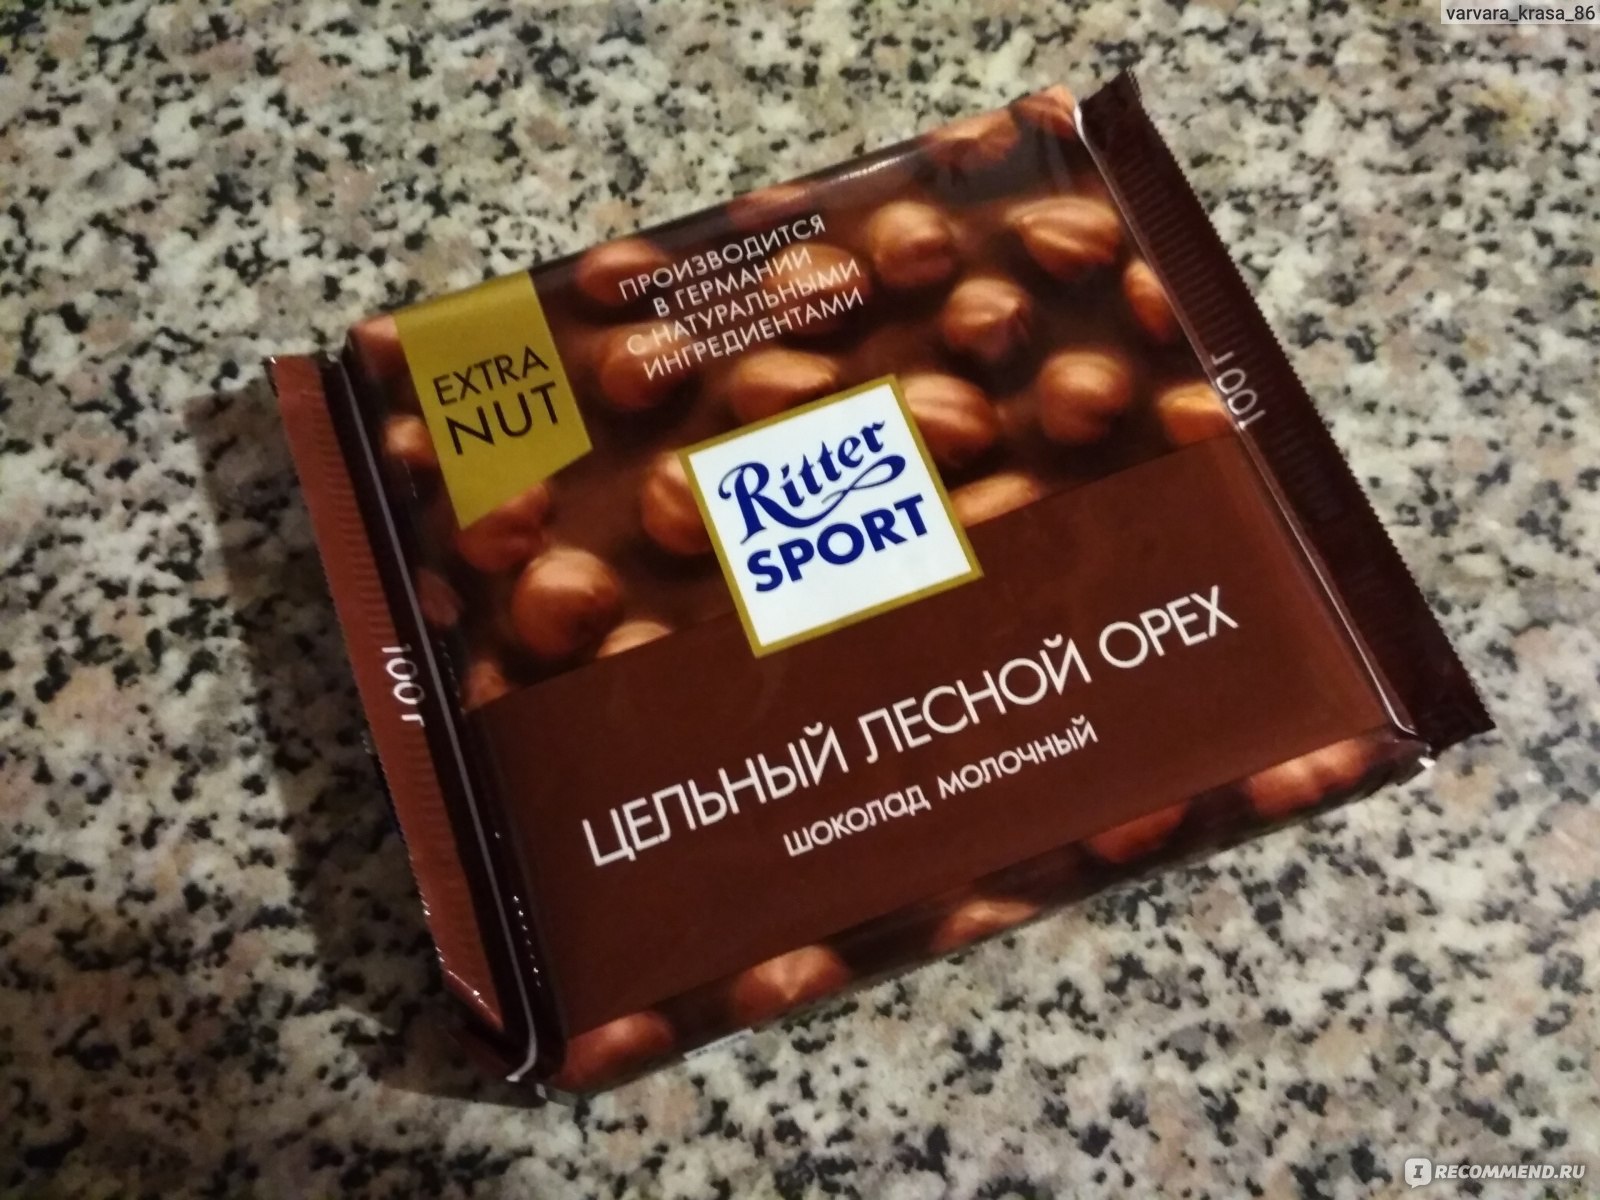 Chocolate Ritter Sport Лесной орех